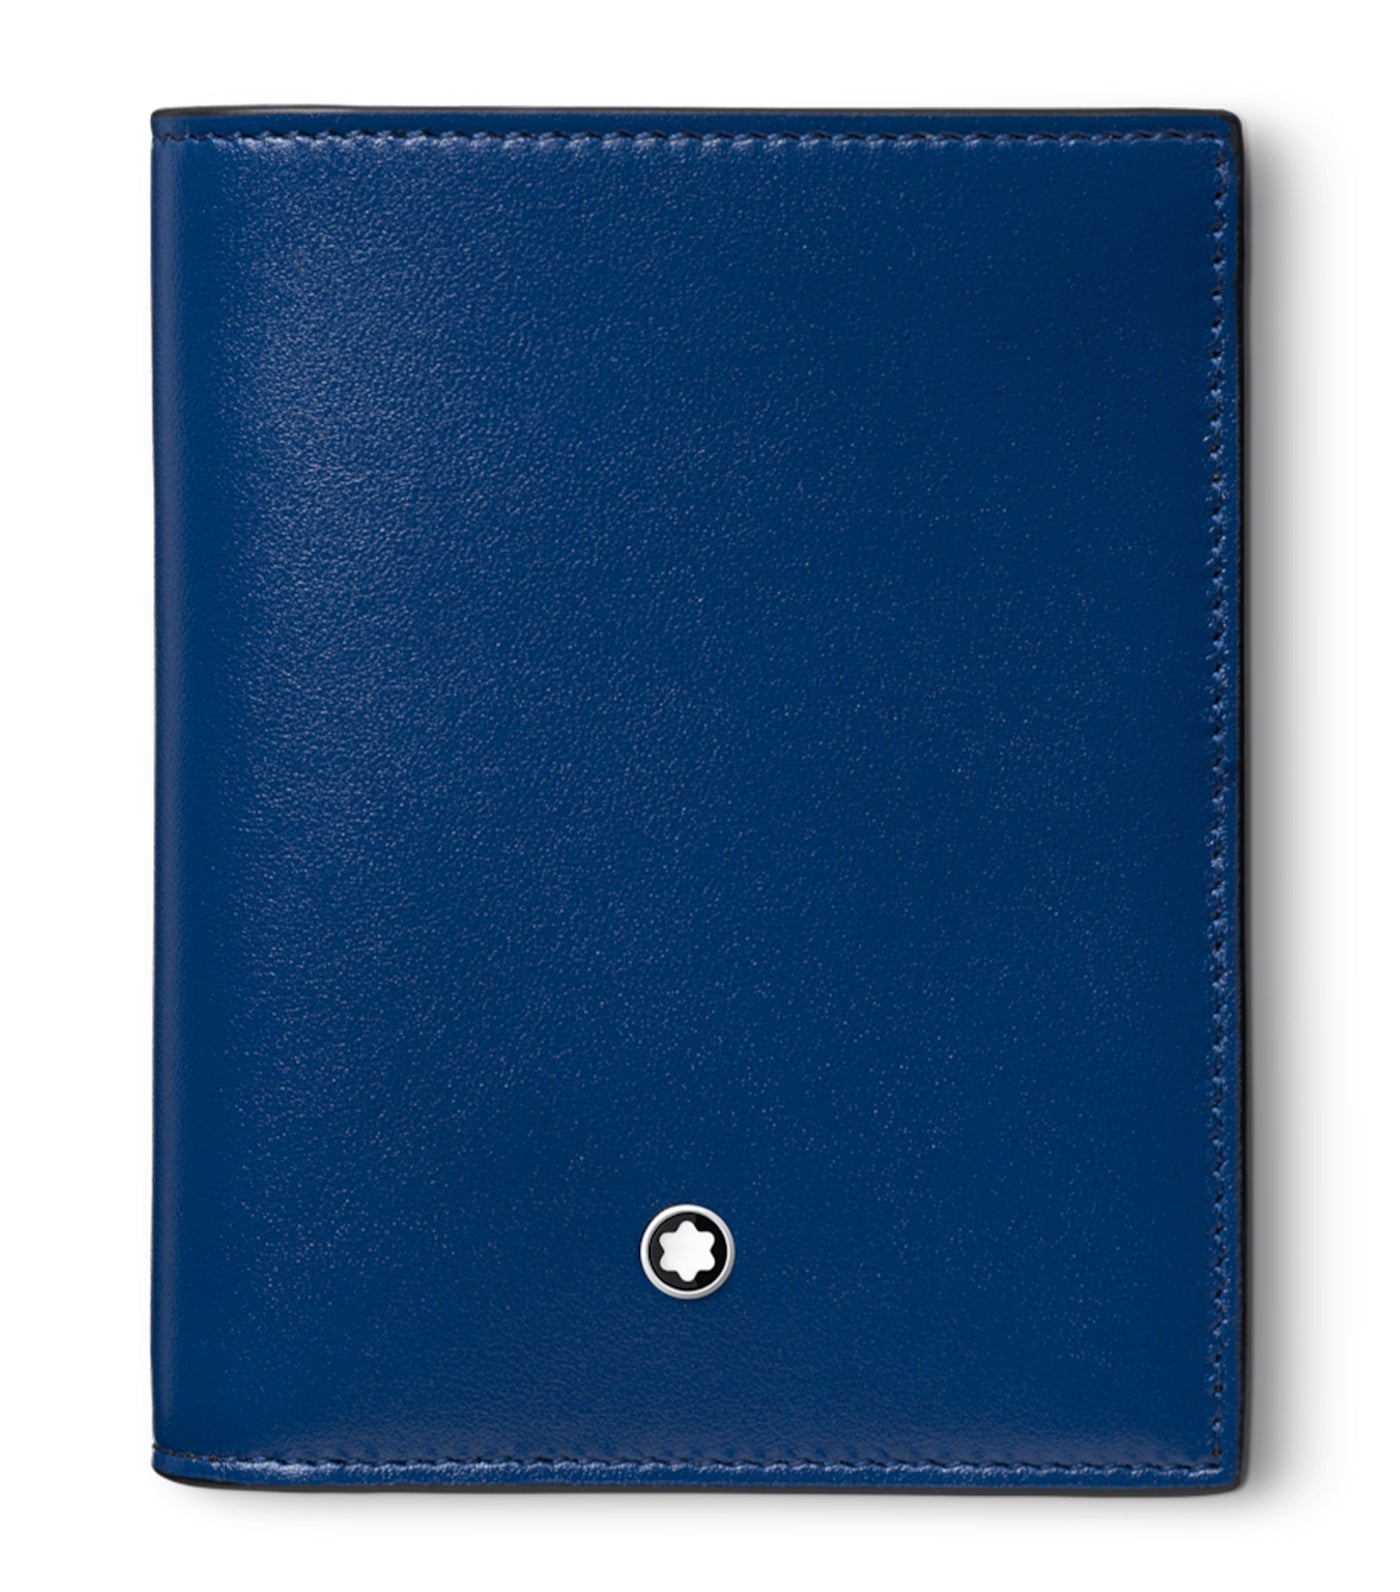 Meisterstück Compact Wallet 6cc Black/Blue